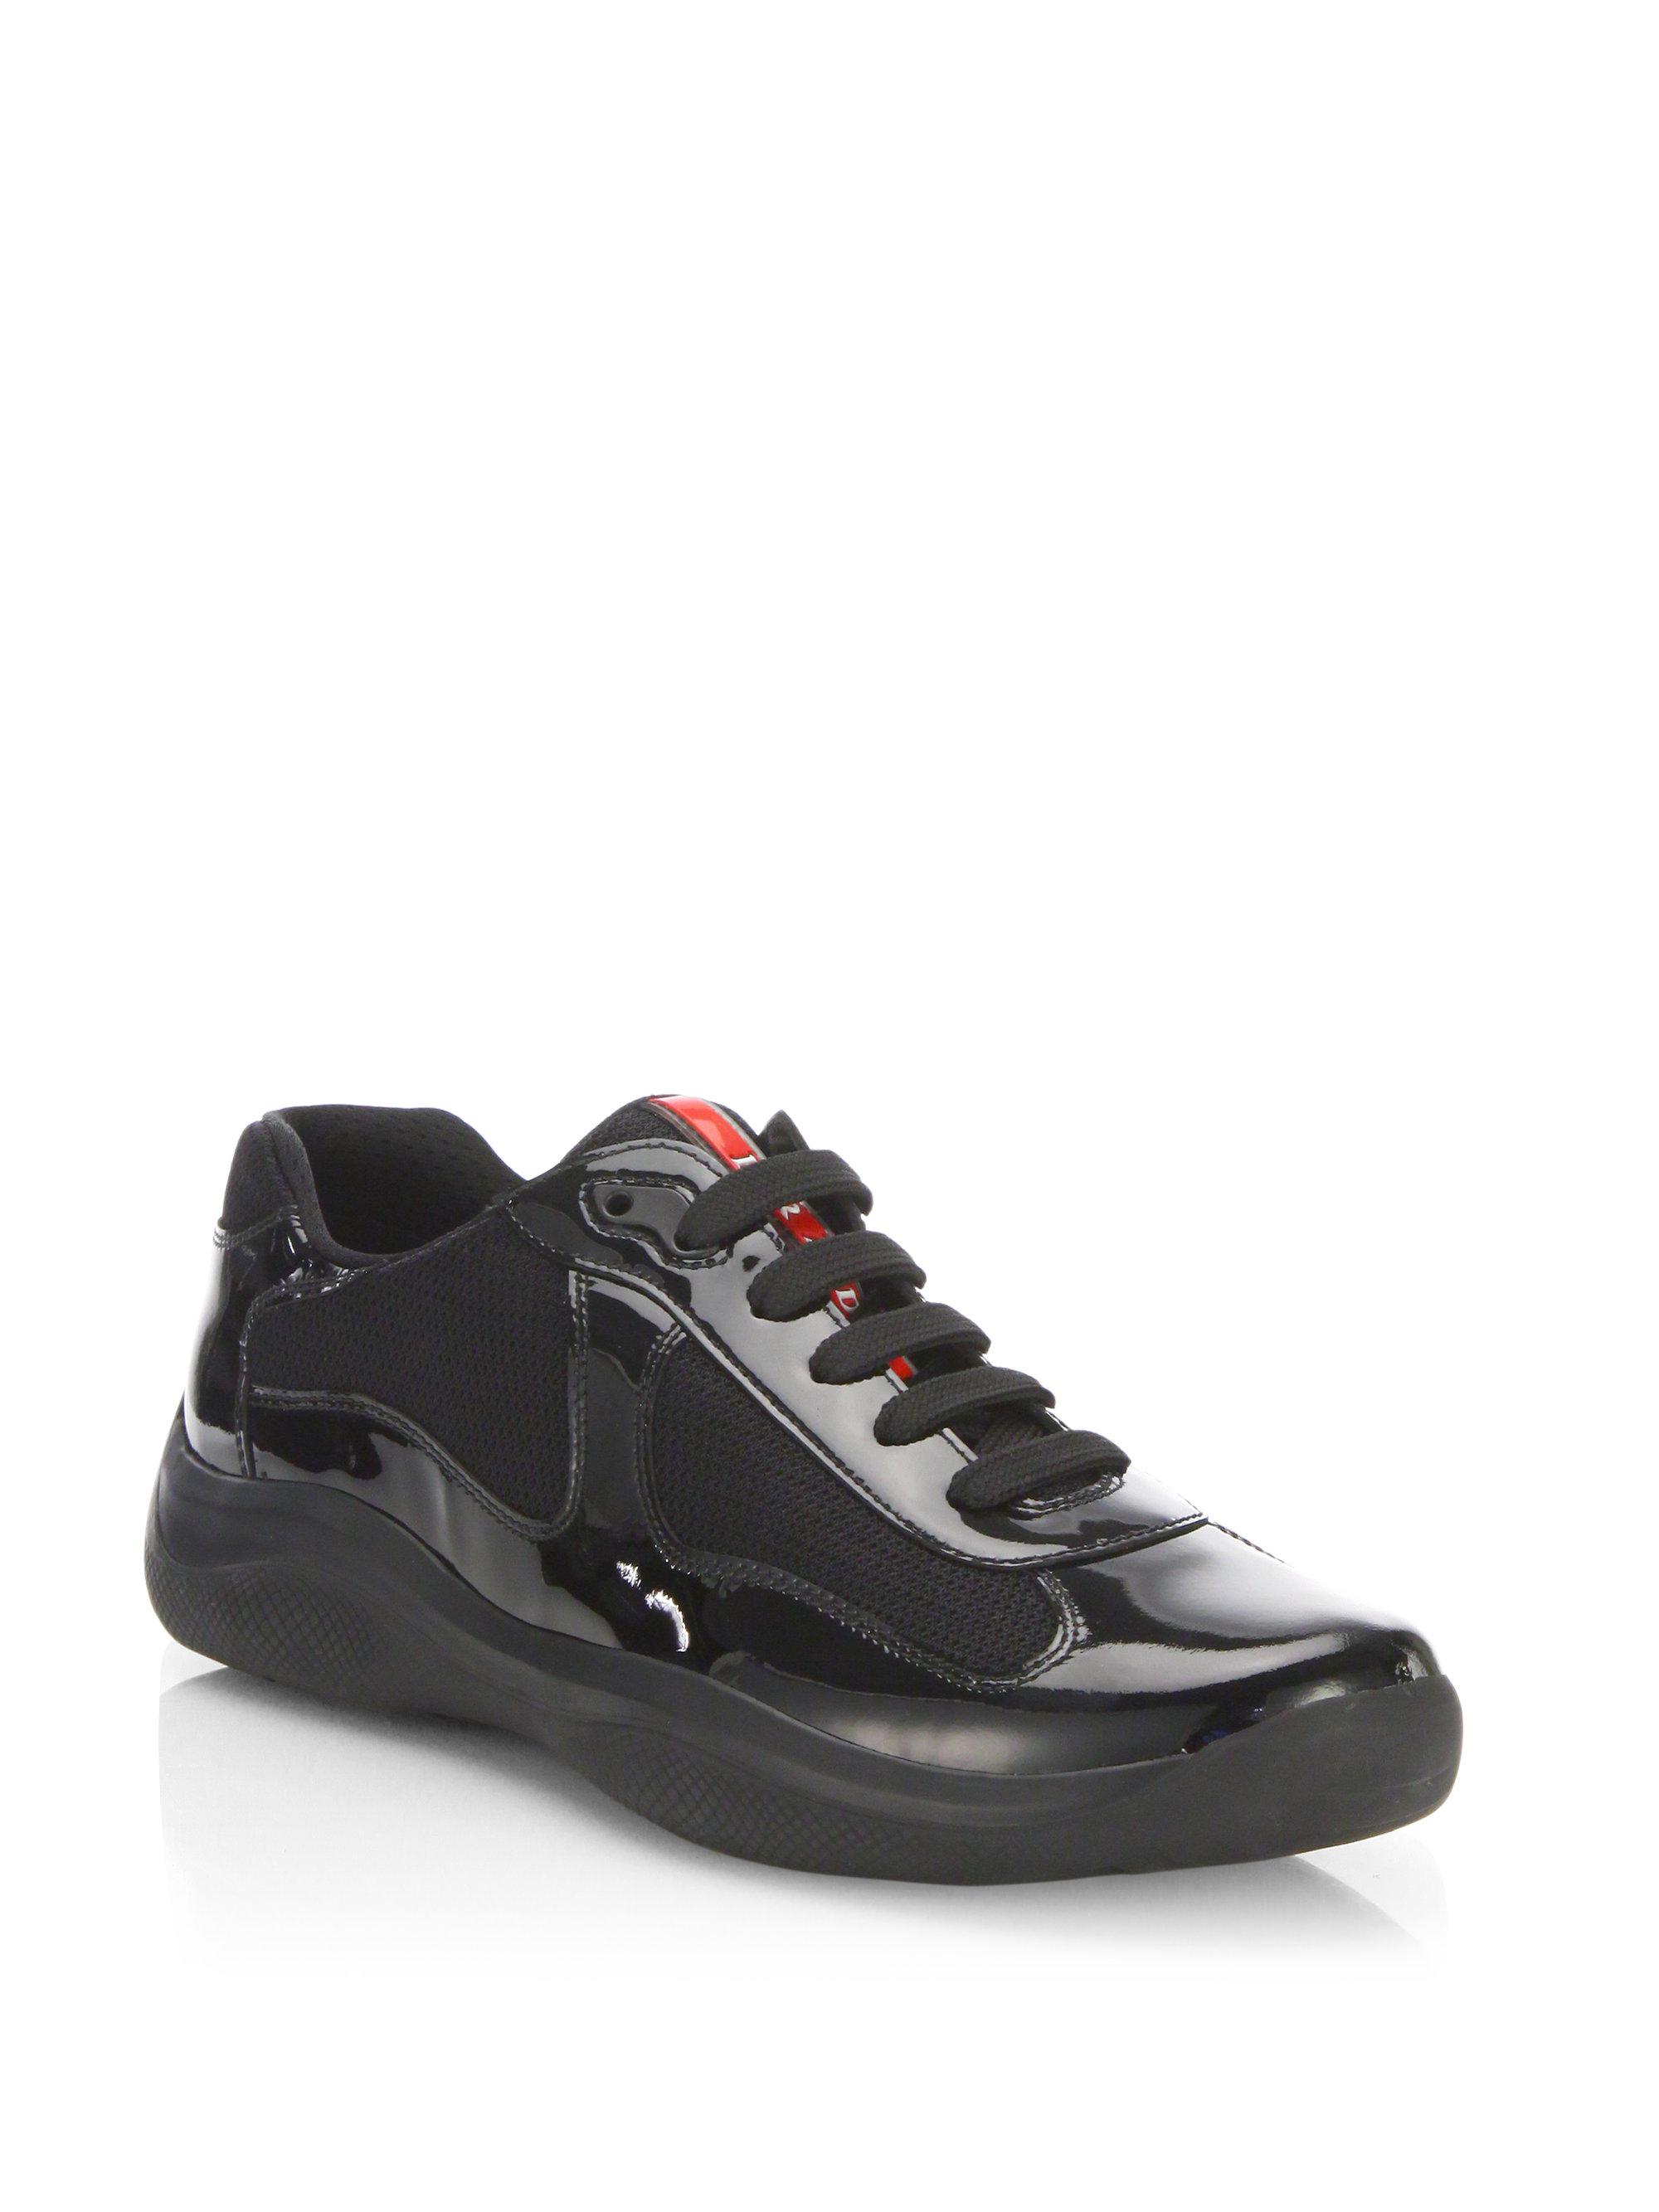 Actualizar 99+ imagen white and black prada shoes - Abzlocal.mx